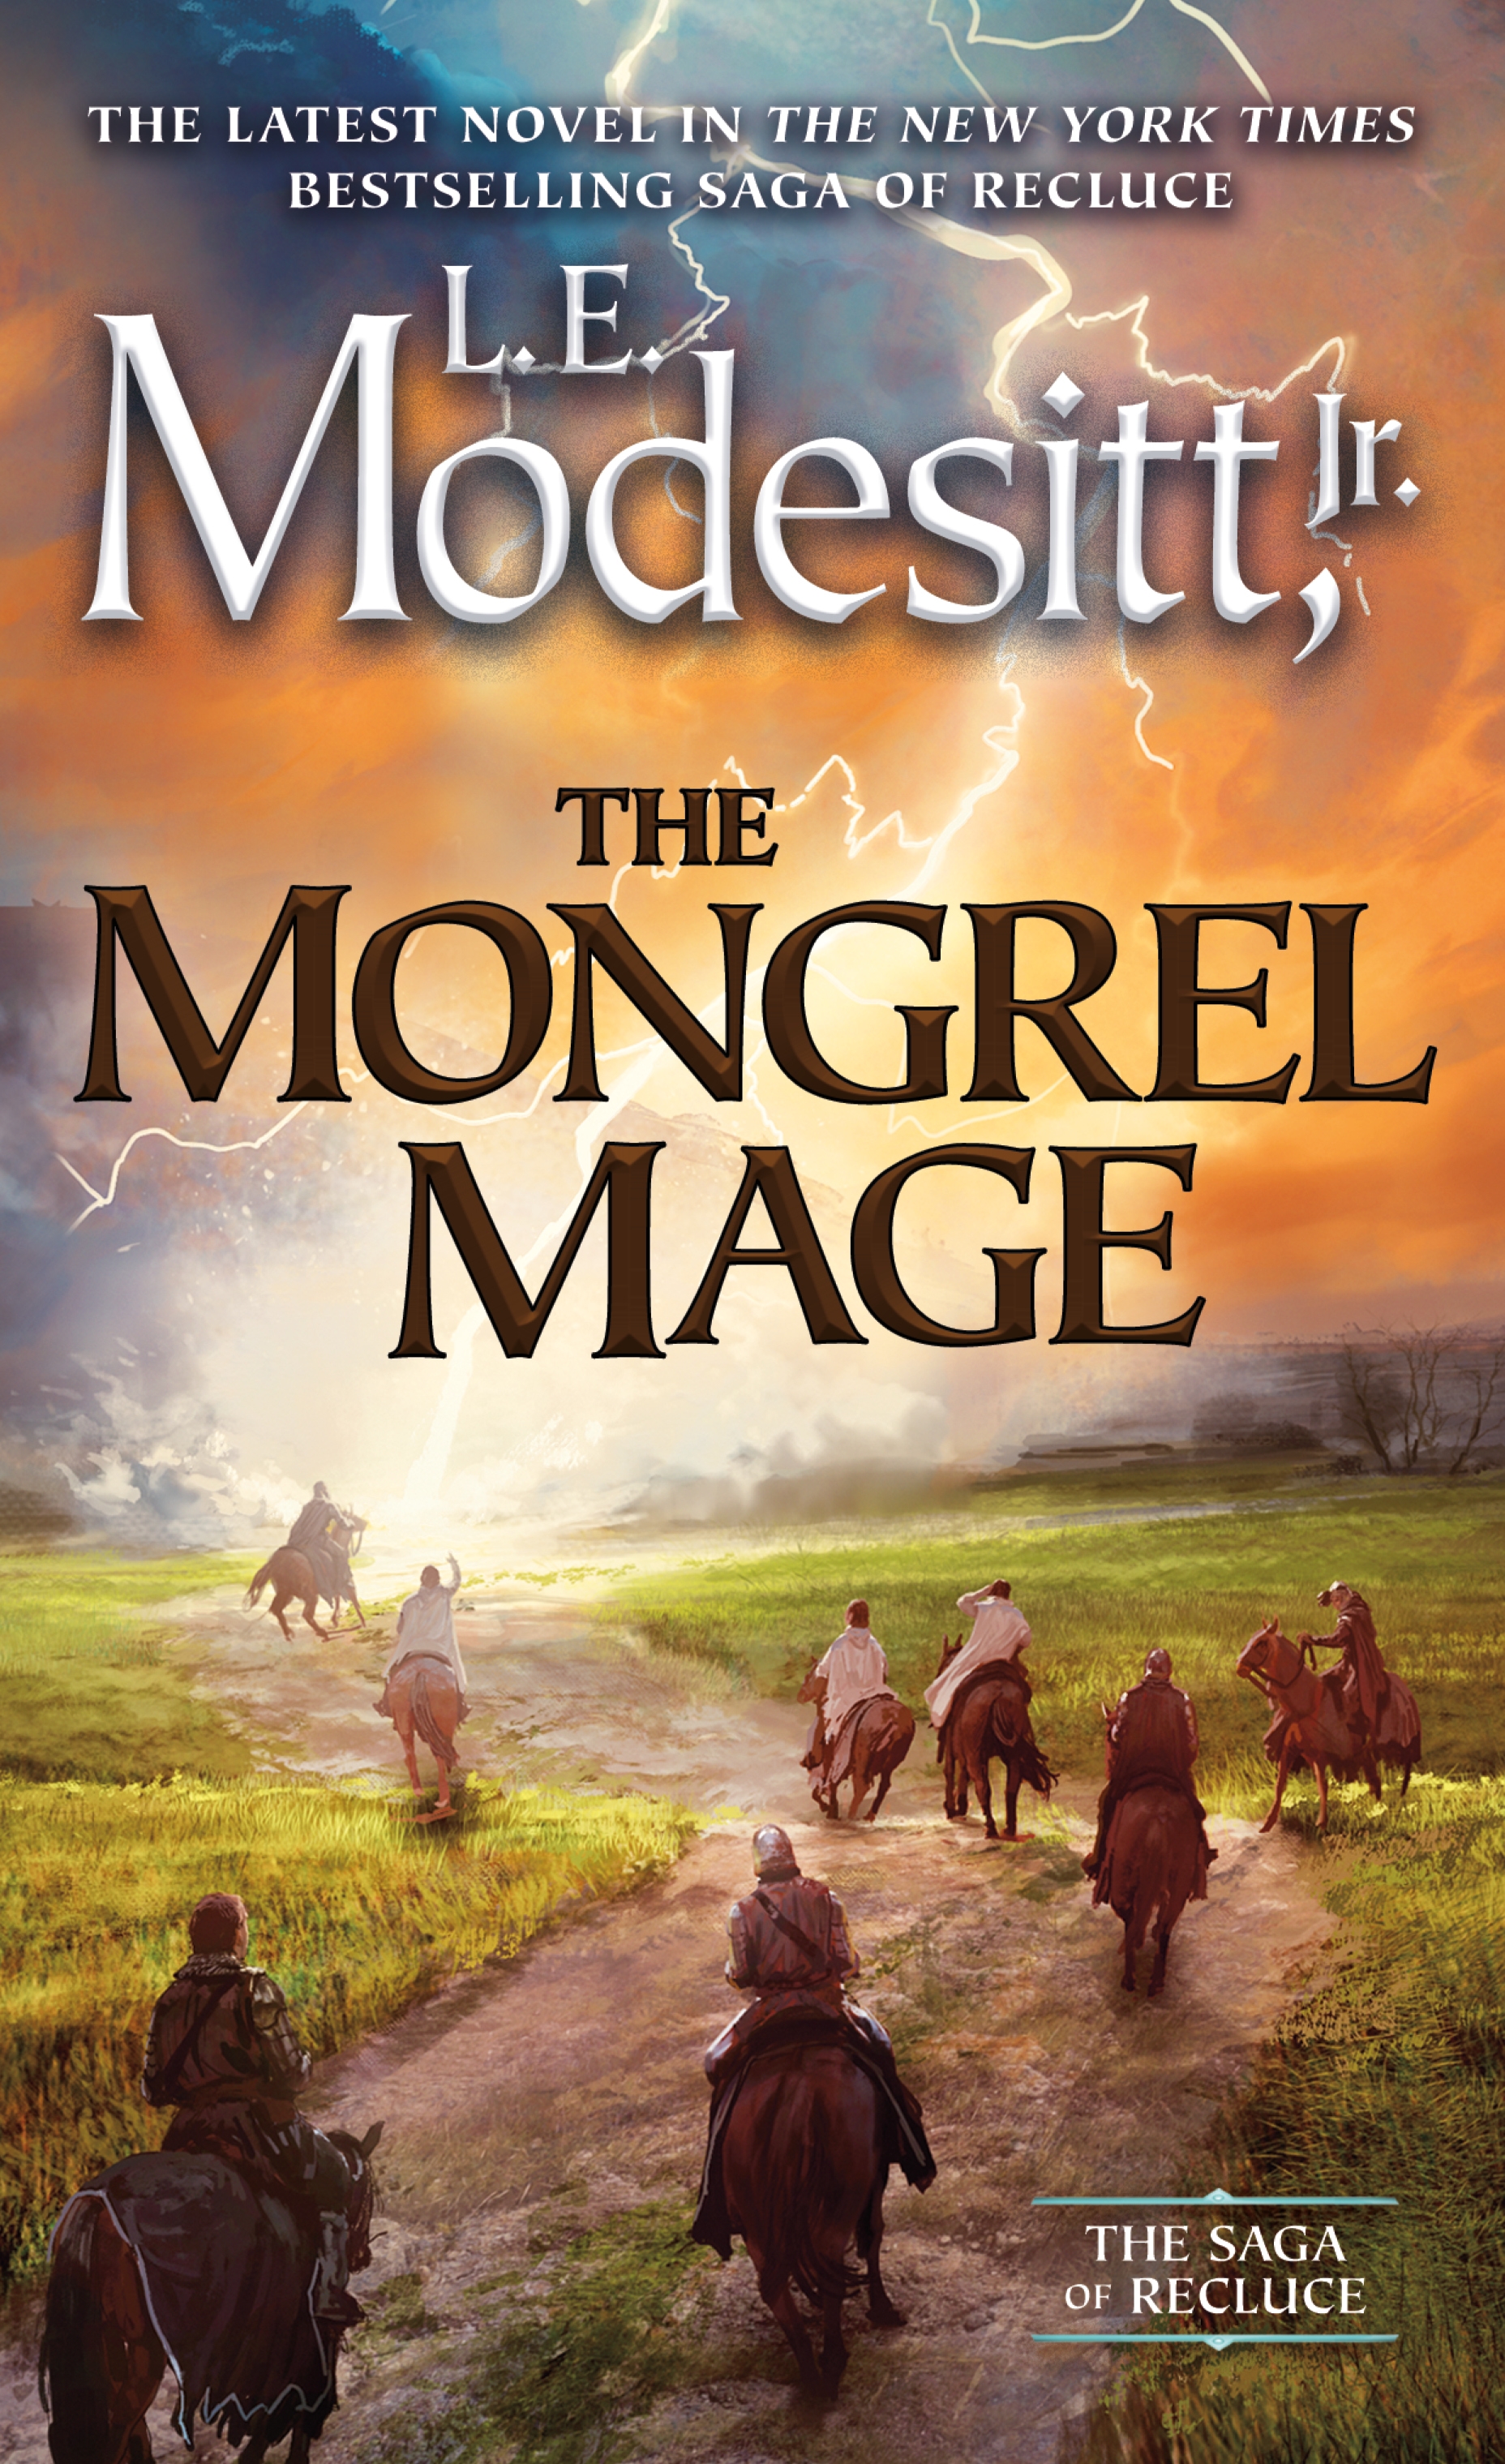 The Mongrel Mage by L. E. Modesitt, Jr.